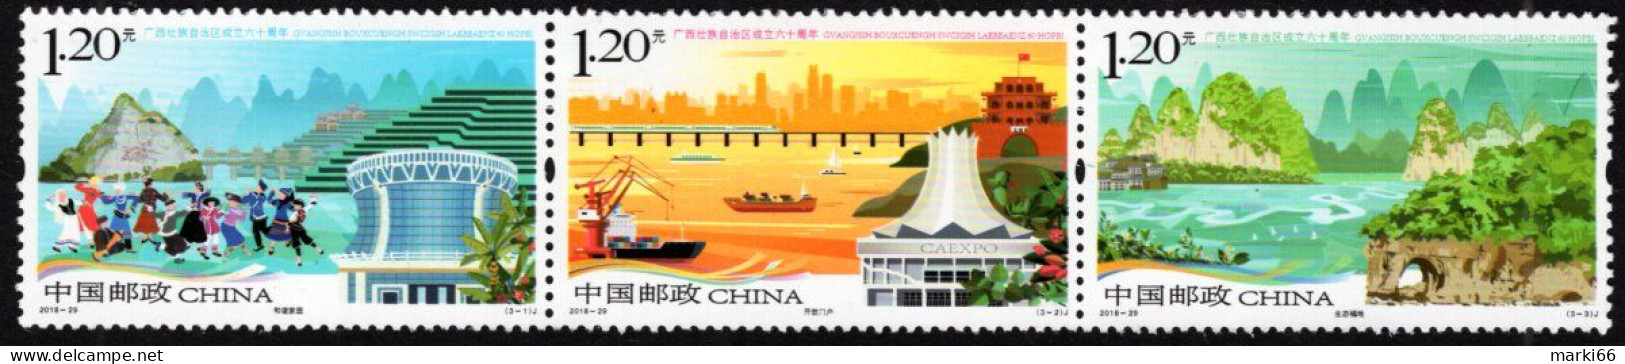 China - 2018 - 60th Anniversary Of Guangxi Zhuang Autonomous Region - Mint Stamp Set - Ungebraucht